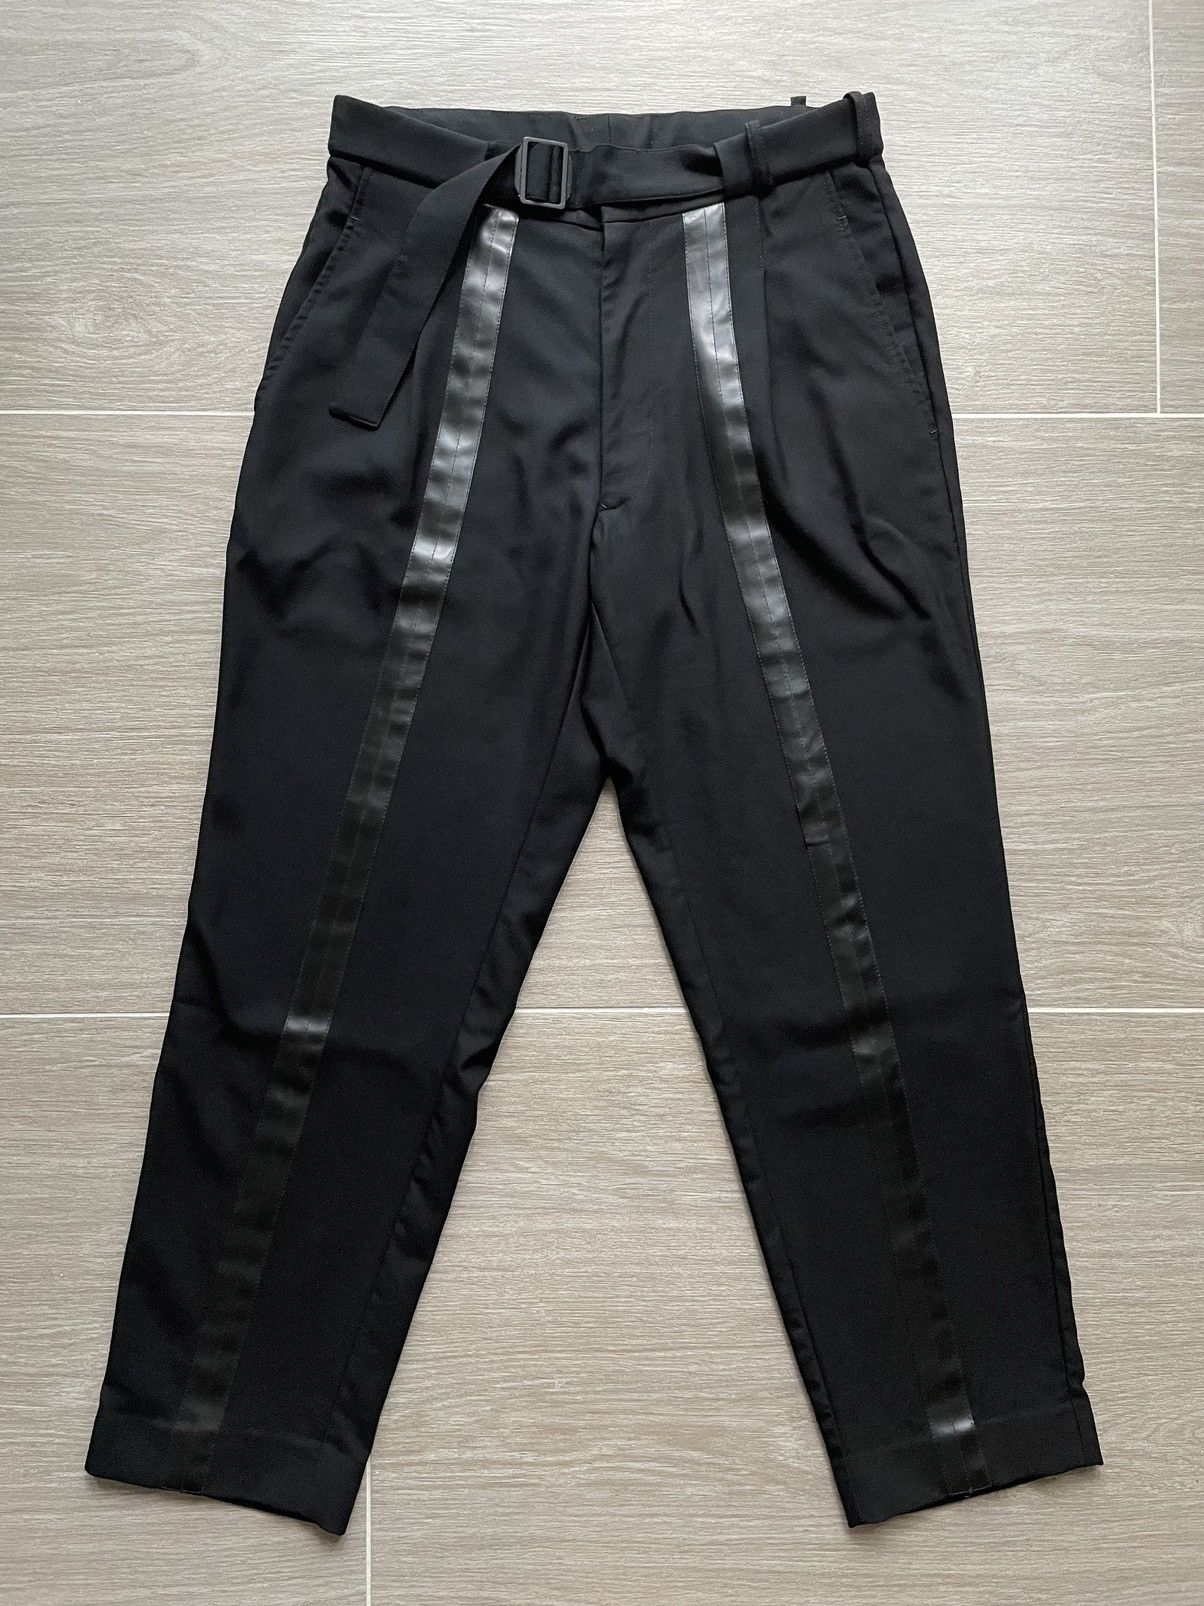 Mackintosh Mackintosh 0001 Zeelander Rubber Taped Trousers | Grailed